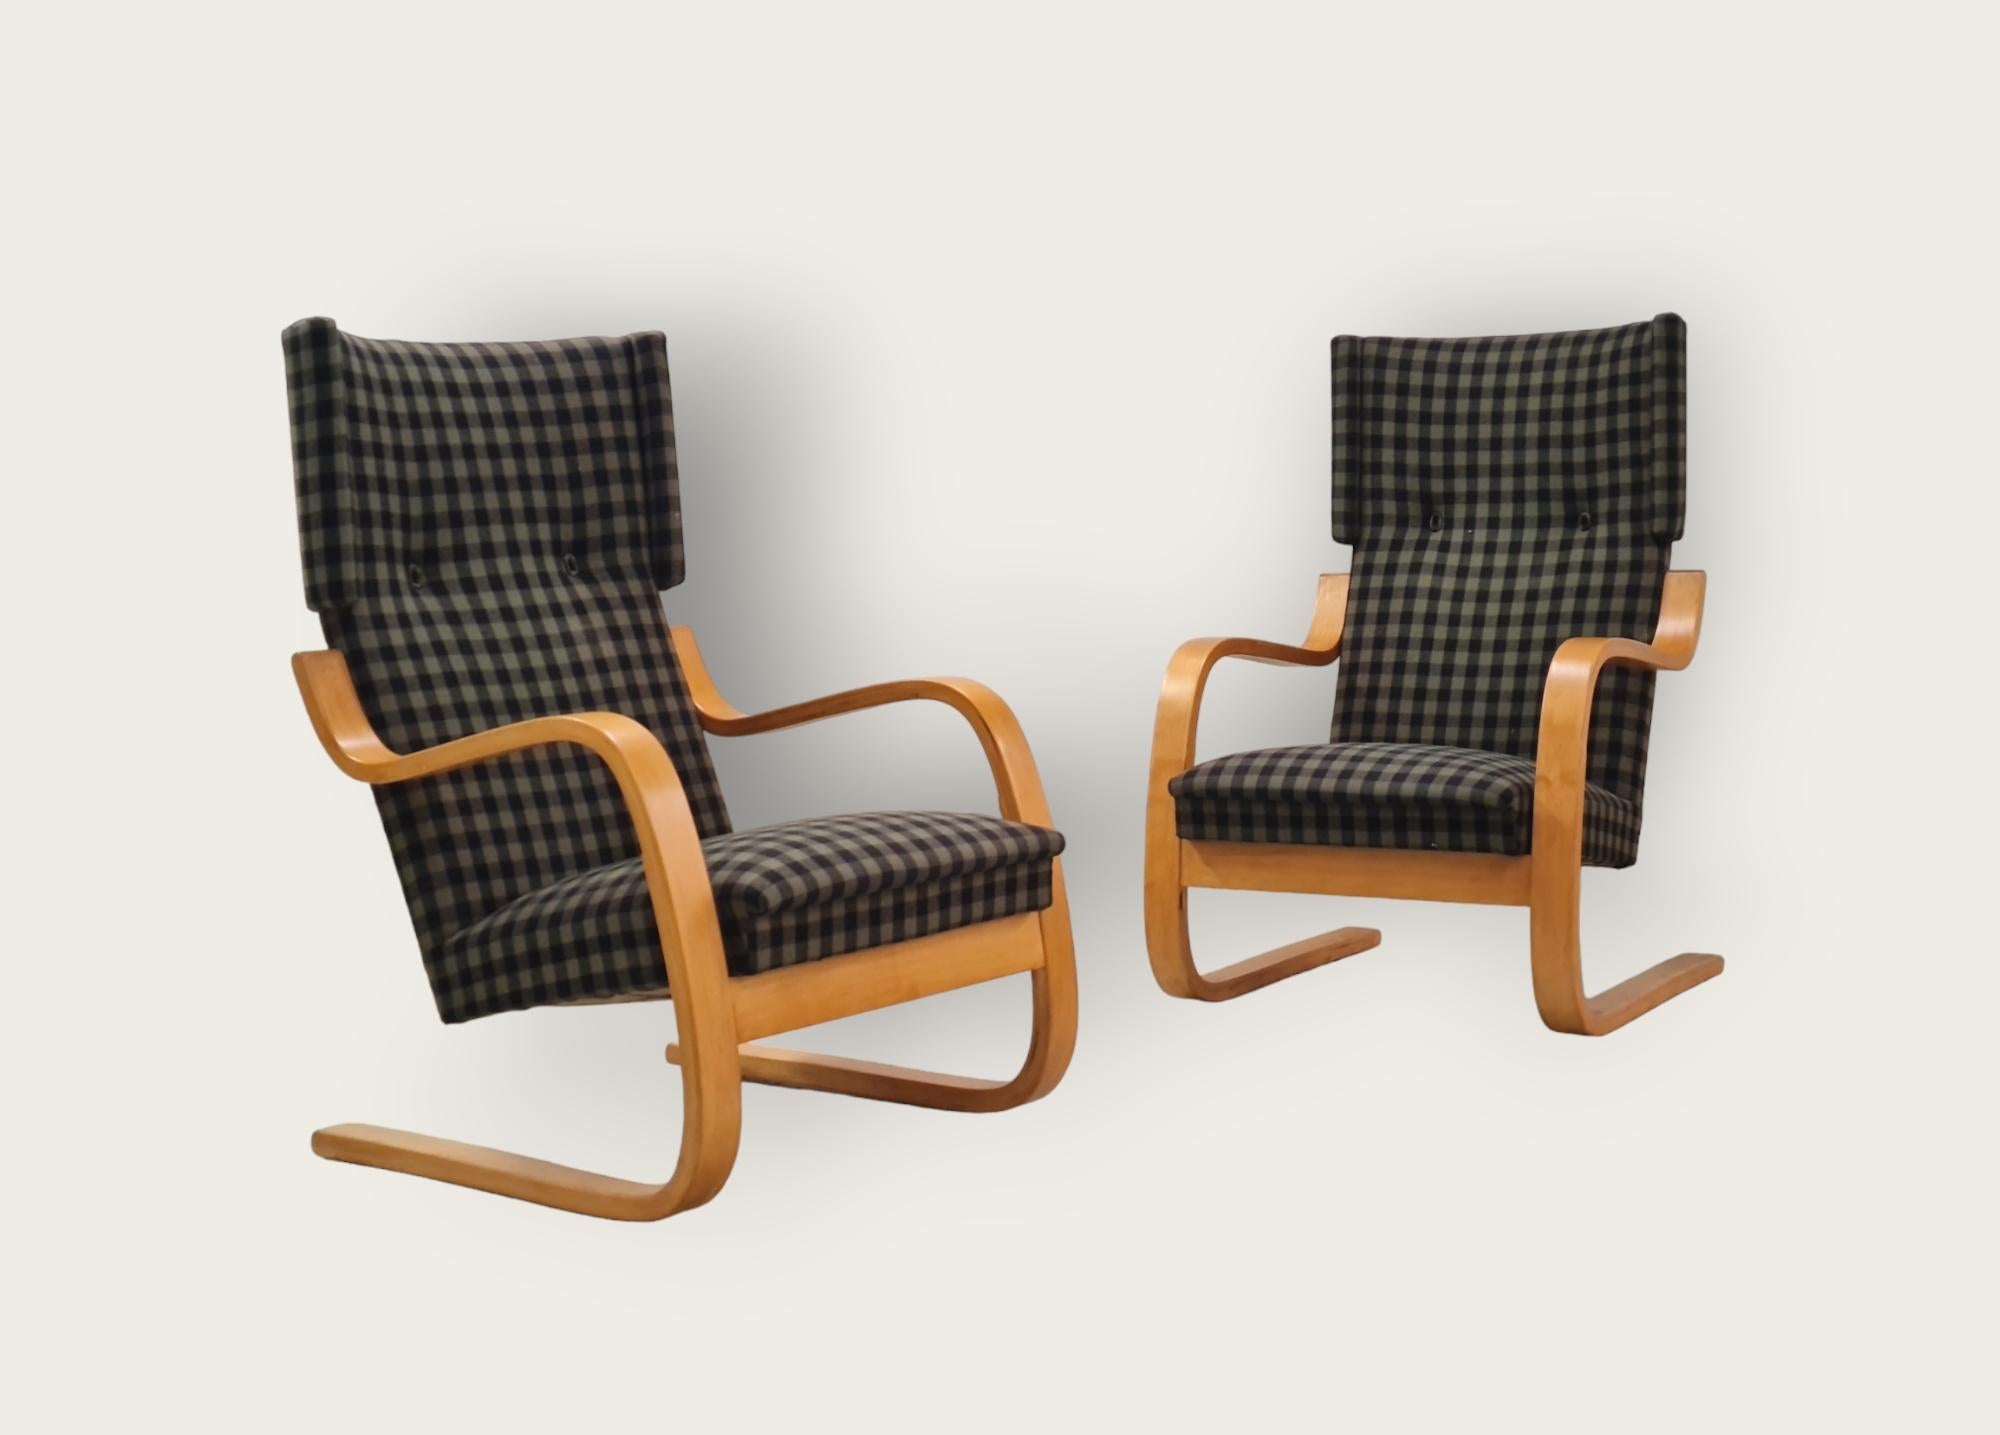 Alvar Aalto Ein Paar Artek Freischwinger-Sessel Modell 401, 1950er Jahre (Skandinavische Moderne) im Angebot